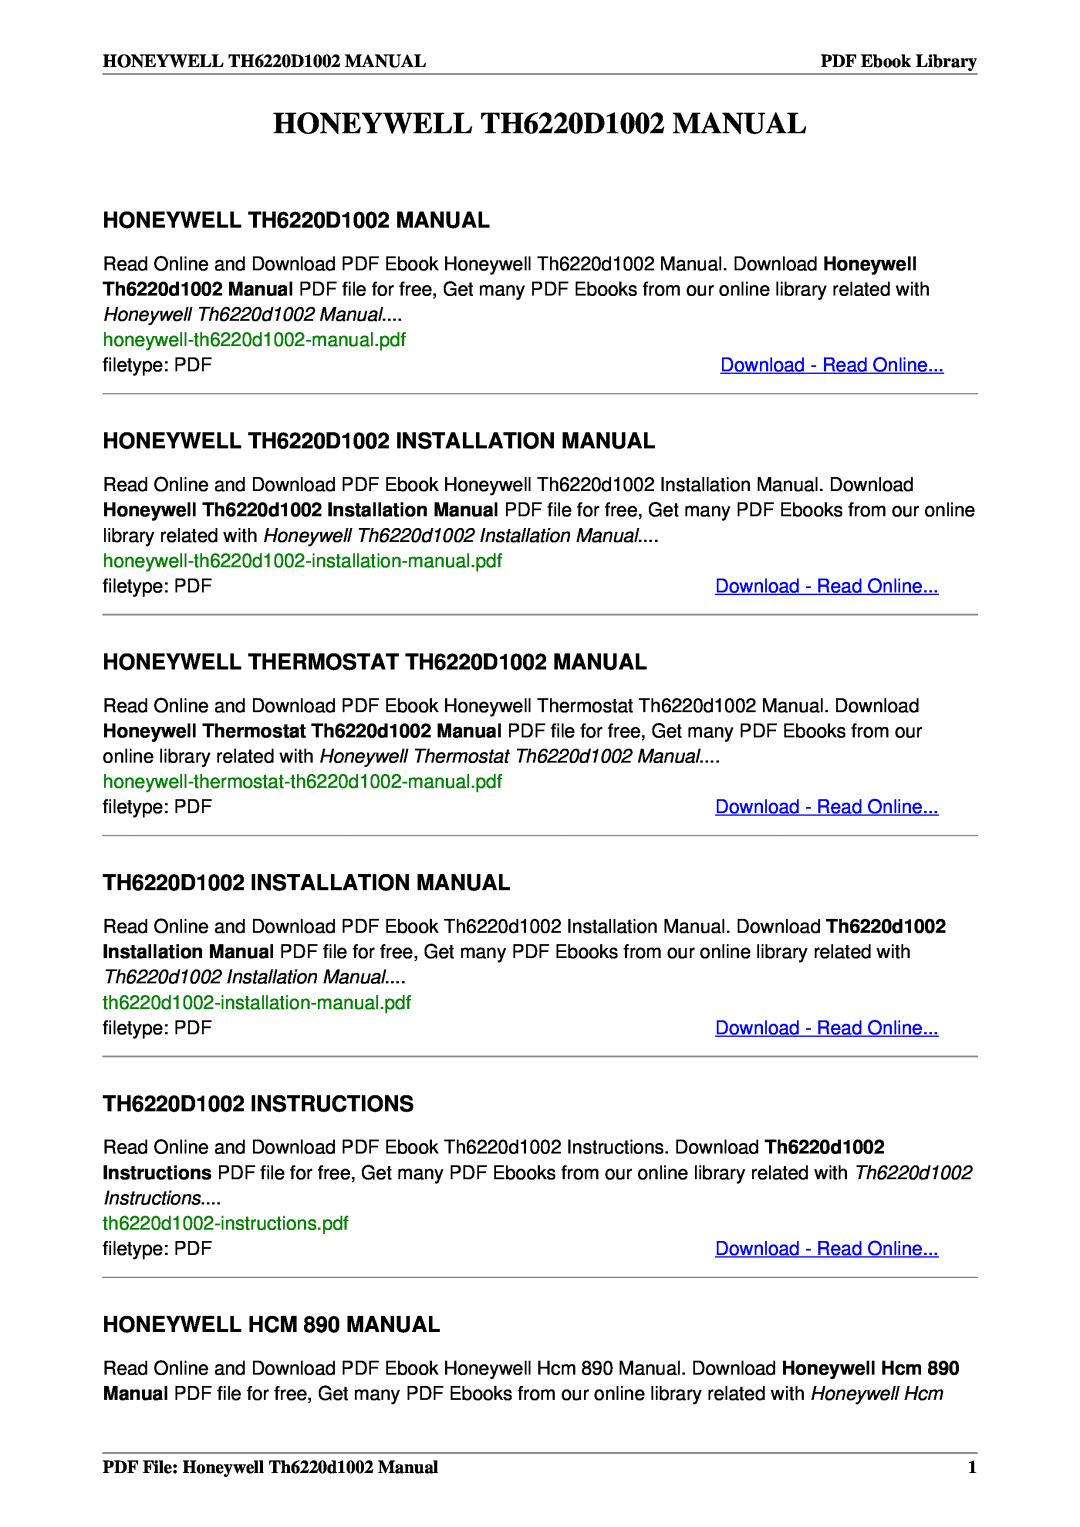 Honeywell installation manual HONEYWELL TH6220D1002 MANUAL, HONEYWELL TH6220D1002 INSTALLATION MANUAL, filetype PDF 